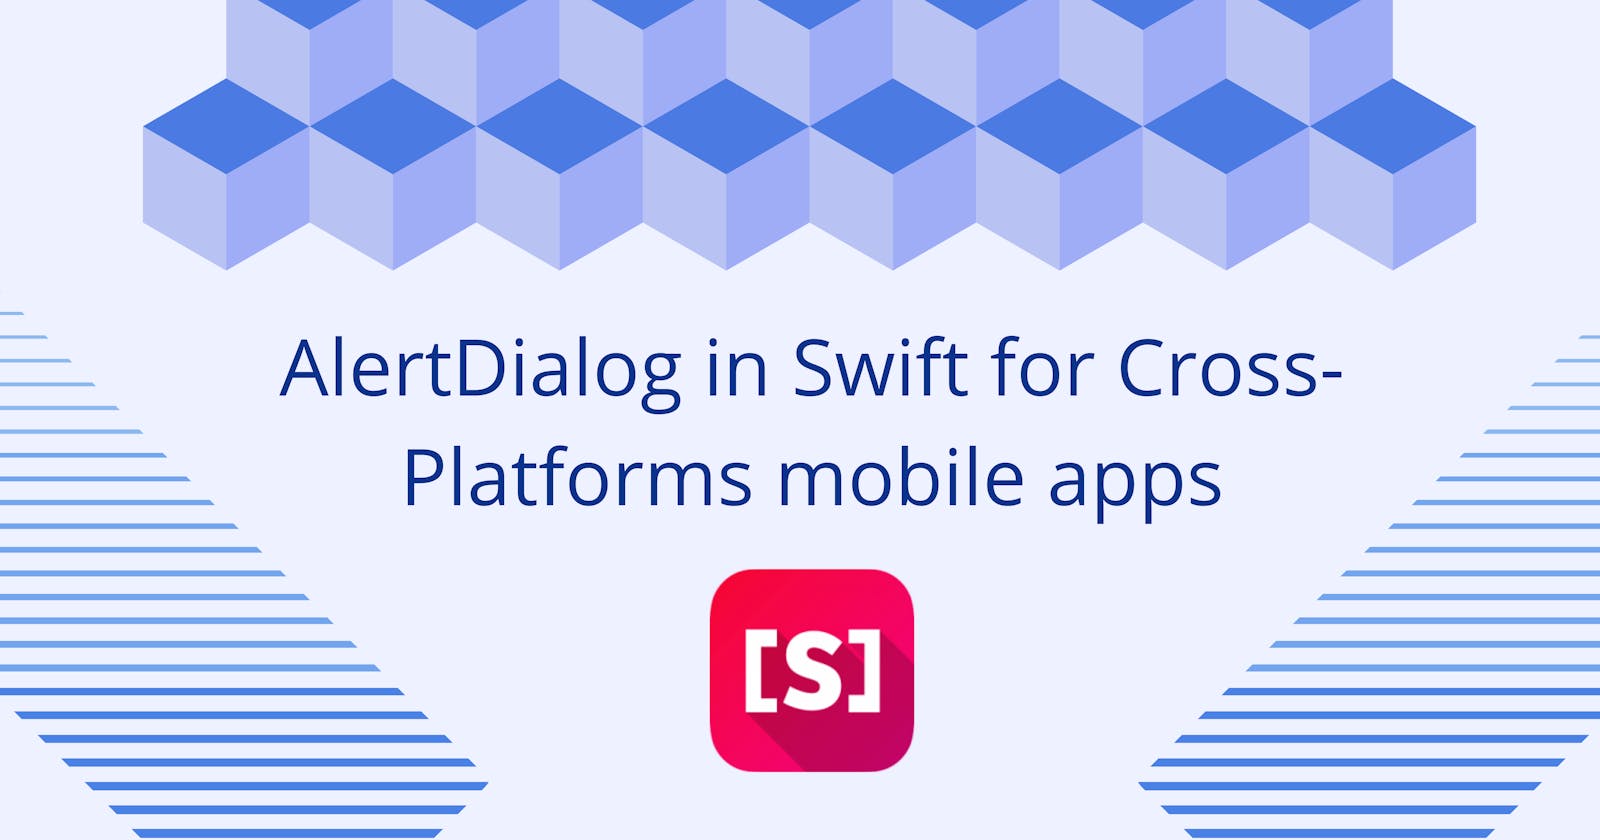 Create AlertDialog for Cross-Platform Mobile Apps